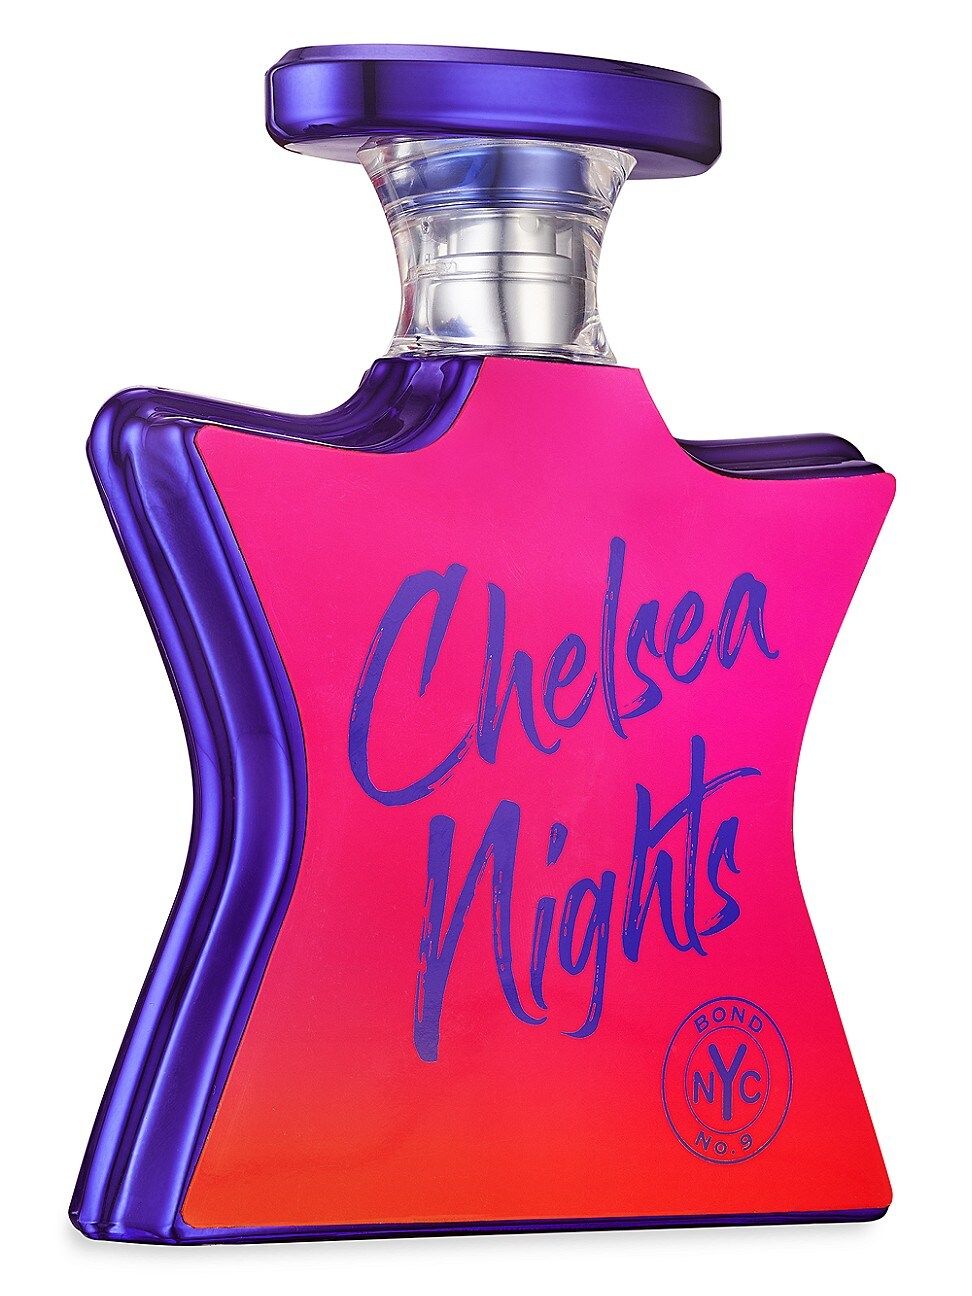 Chelsea Nights - Size 3.4-5.0 oz. | Saks Fifth Avenue